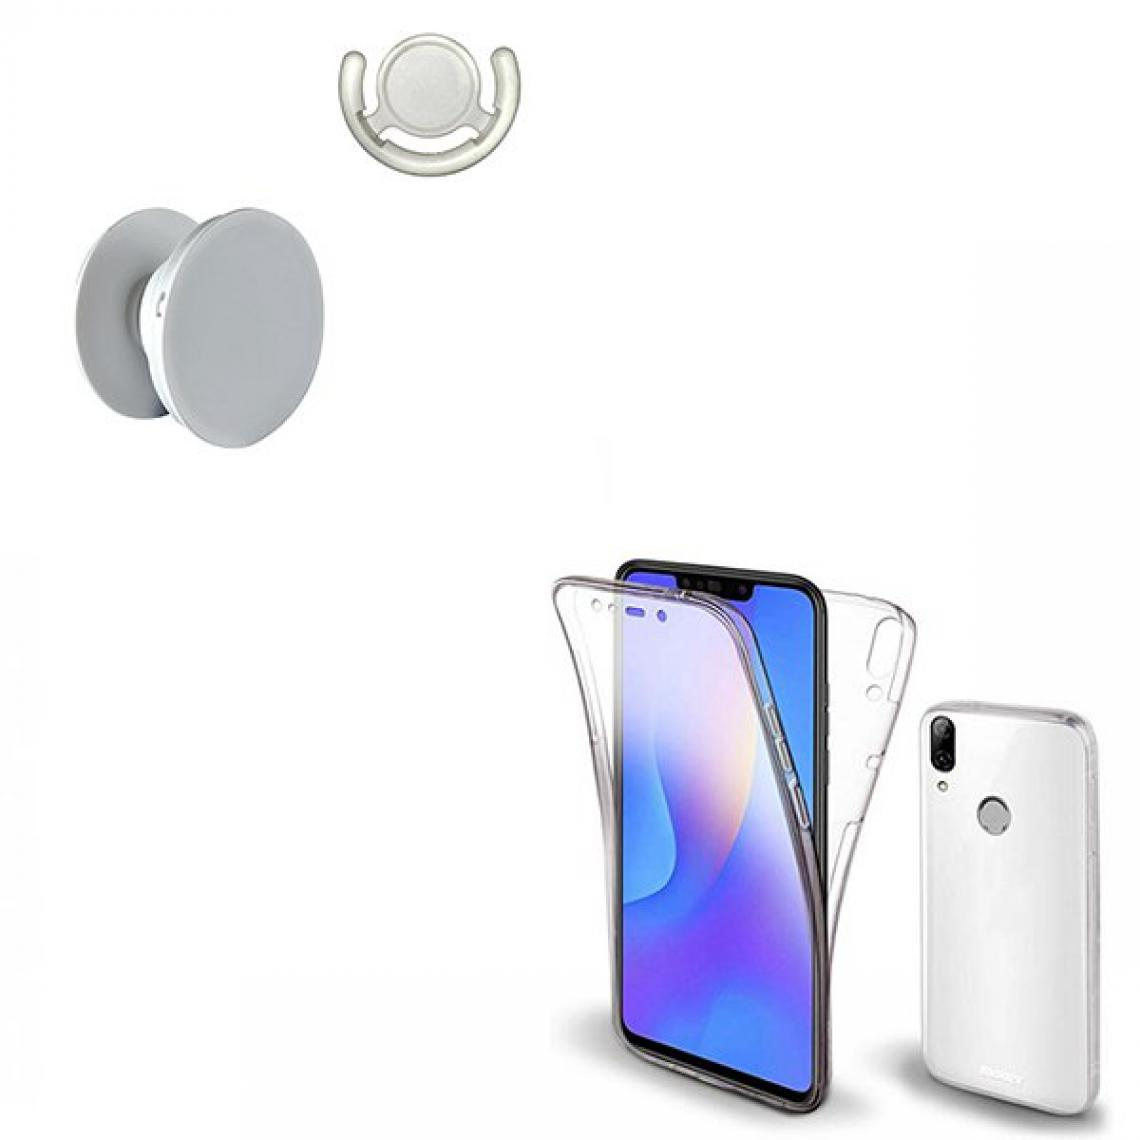 Phonecare - Kit Coque 3x1 360° Impact Protection + 1 PopSocket + 1 Support PopSocket Blanc - Impact Protection - Huawei P Smart Plus 2018 - Coque, étui smartphone